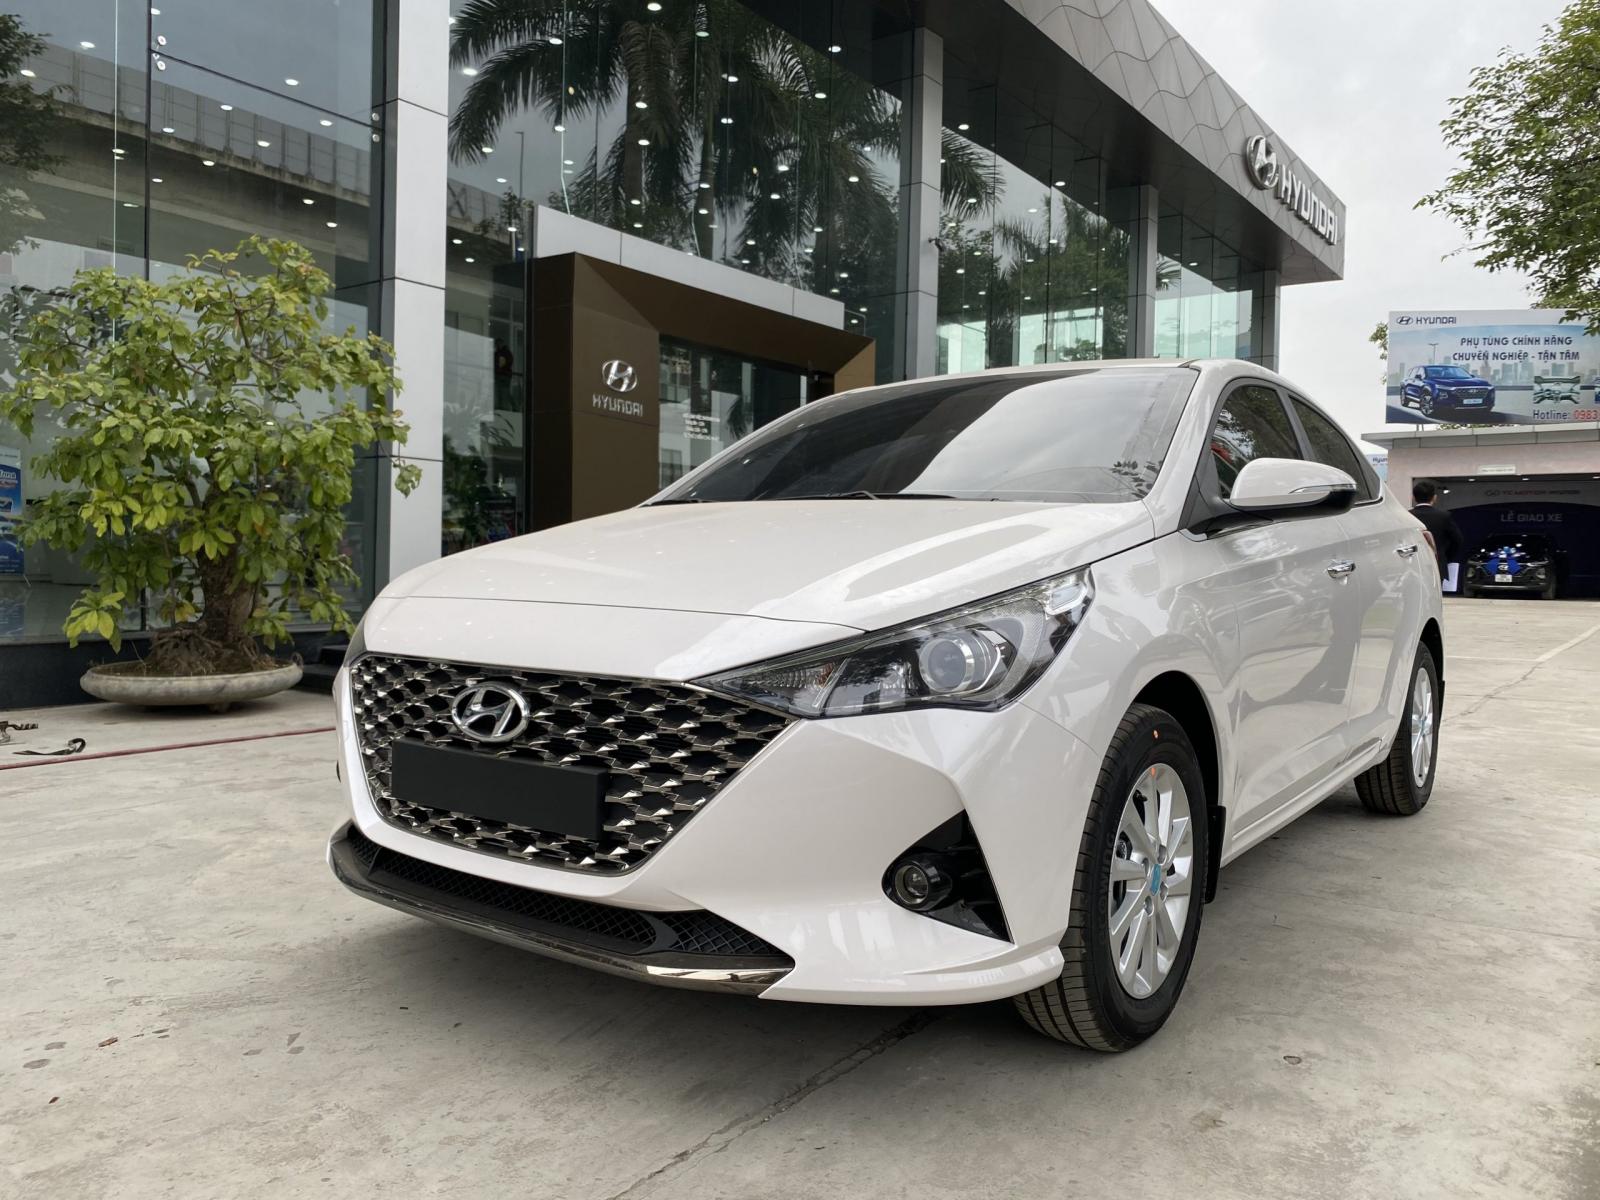 Hyundai Accent Polar White brings exhilarating energy